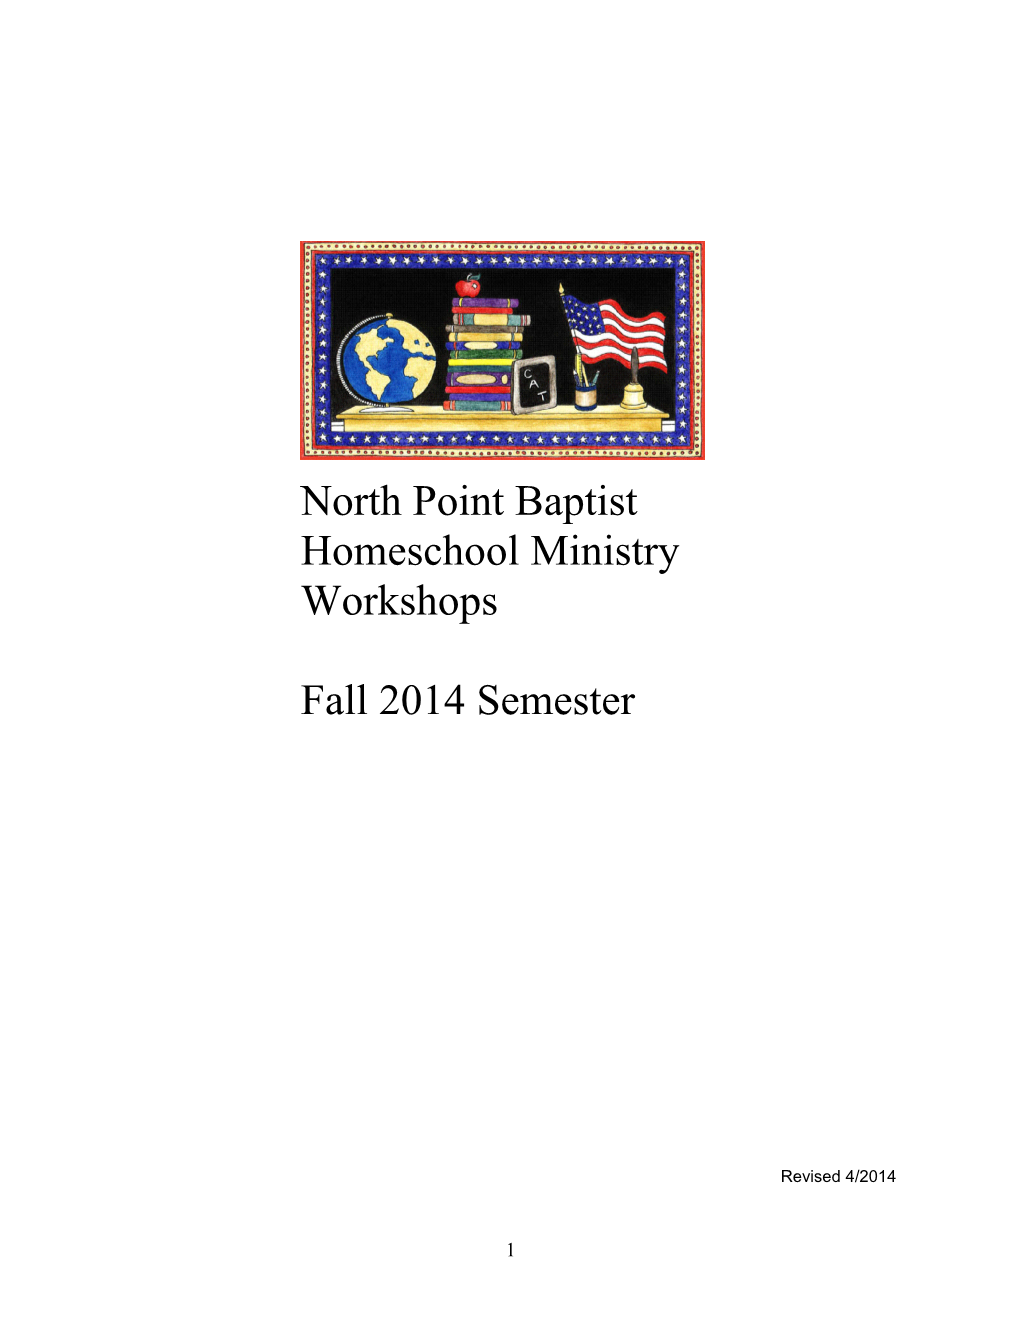 North Point Baptist Homeschool Ministry Workshops